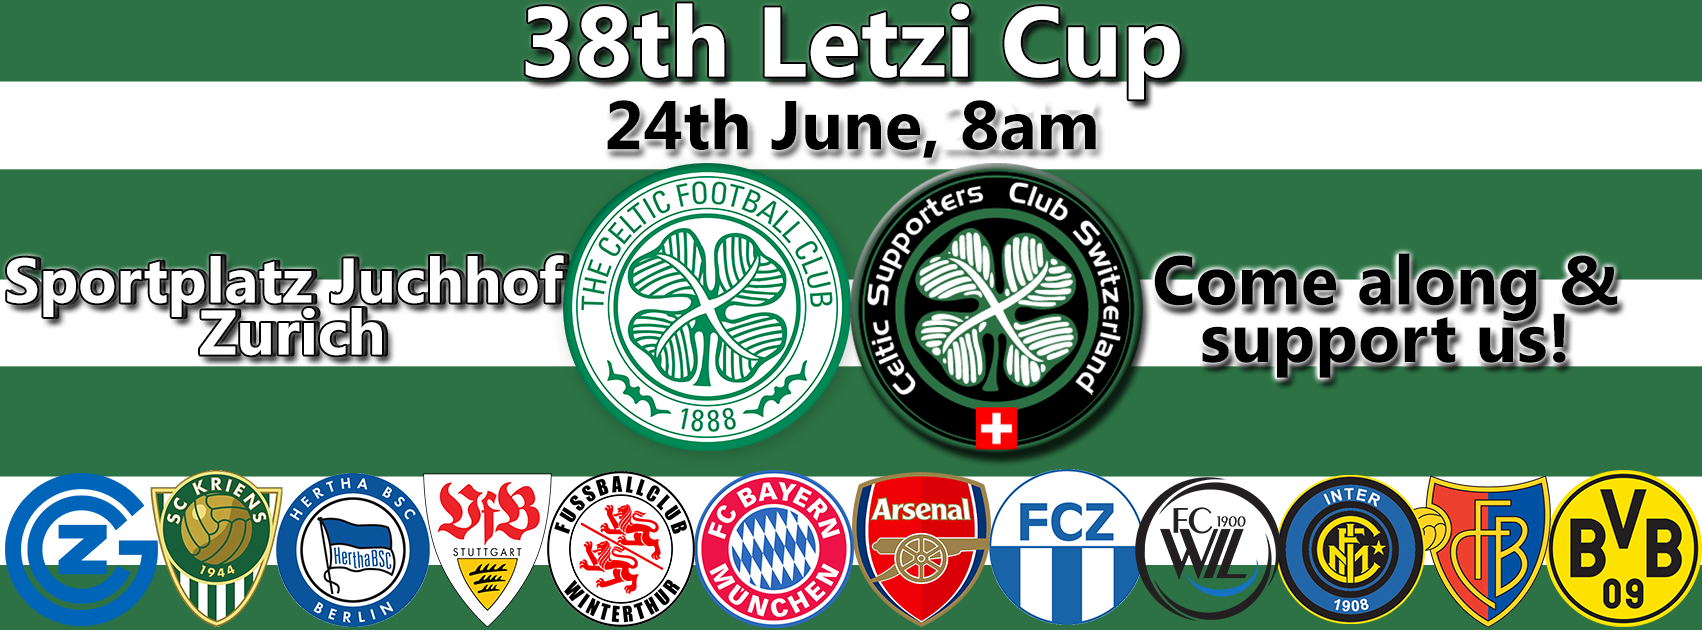 38rd Letzi Cup – Fanclub tournament with CSC Switzerland